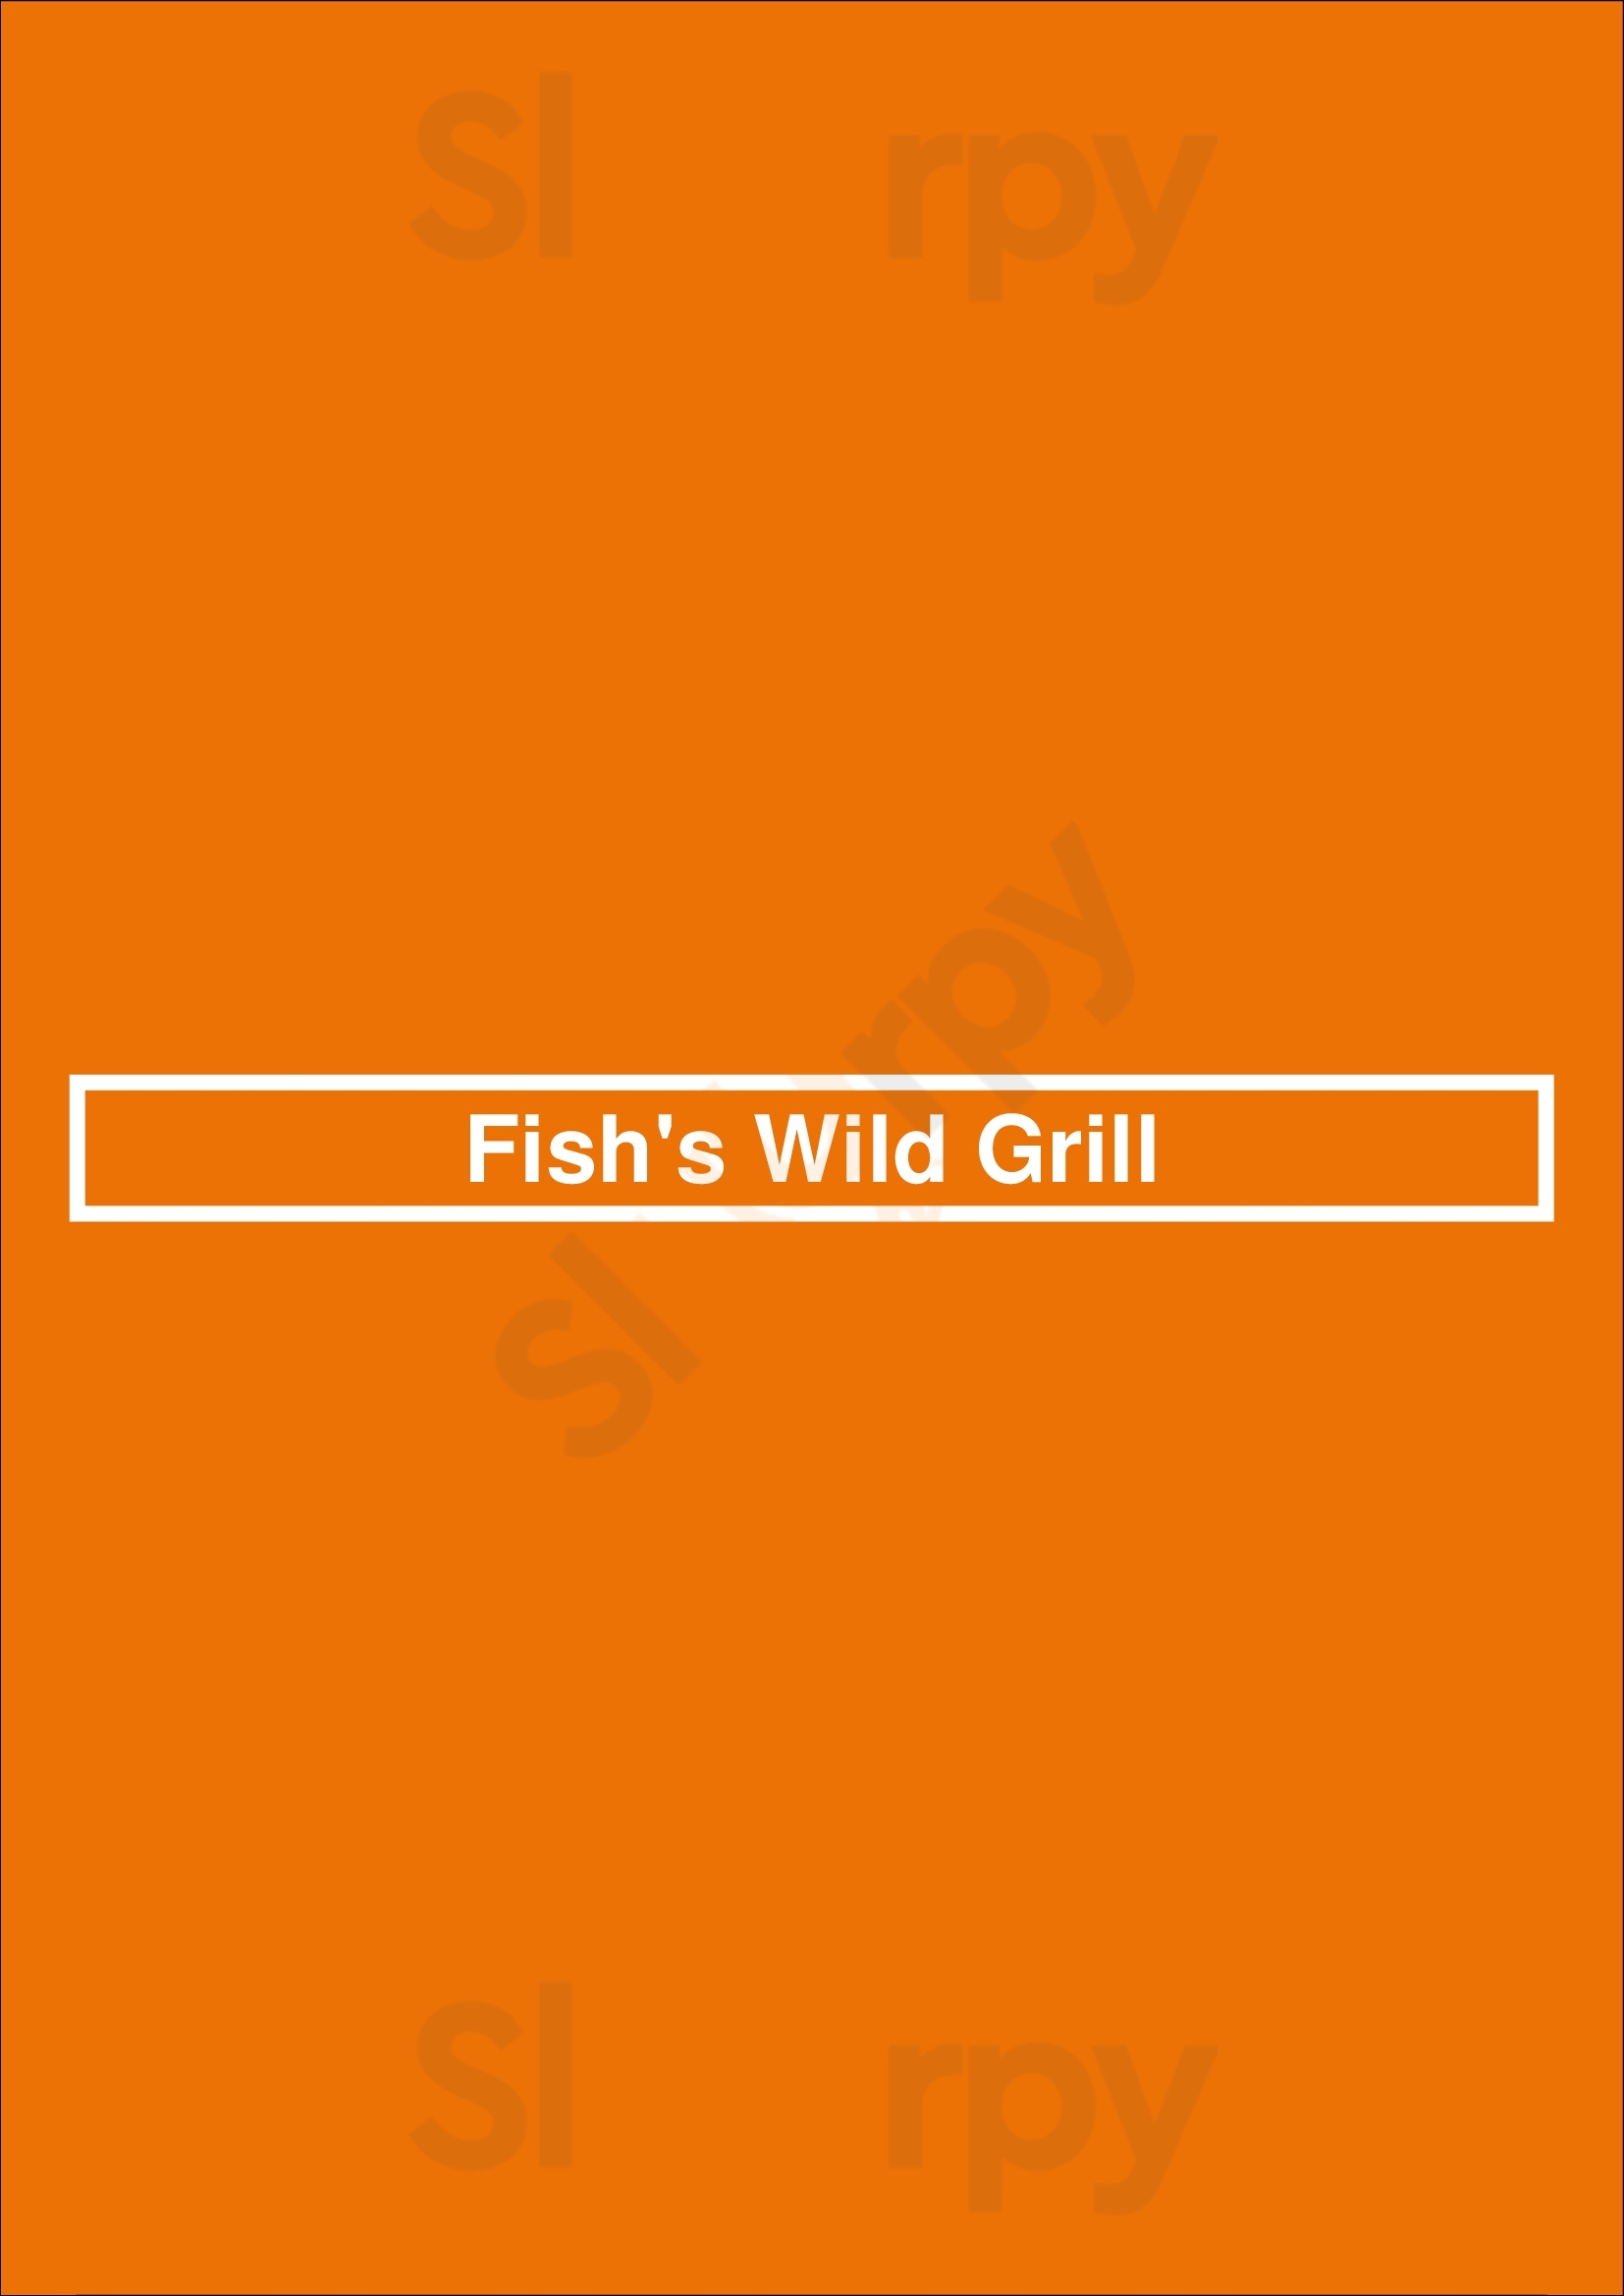 Fish's Wild San Jose Menu - 1